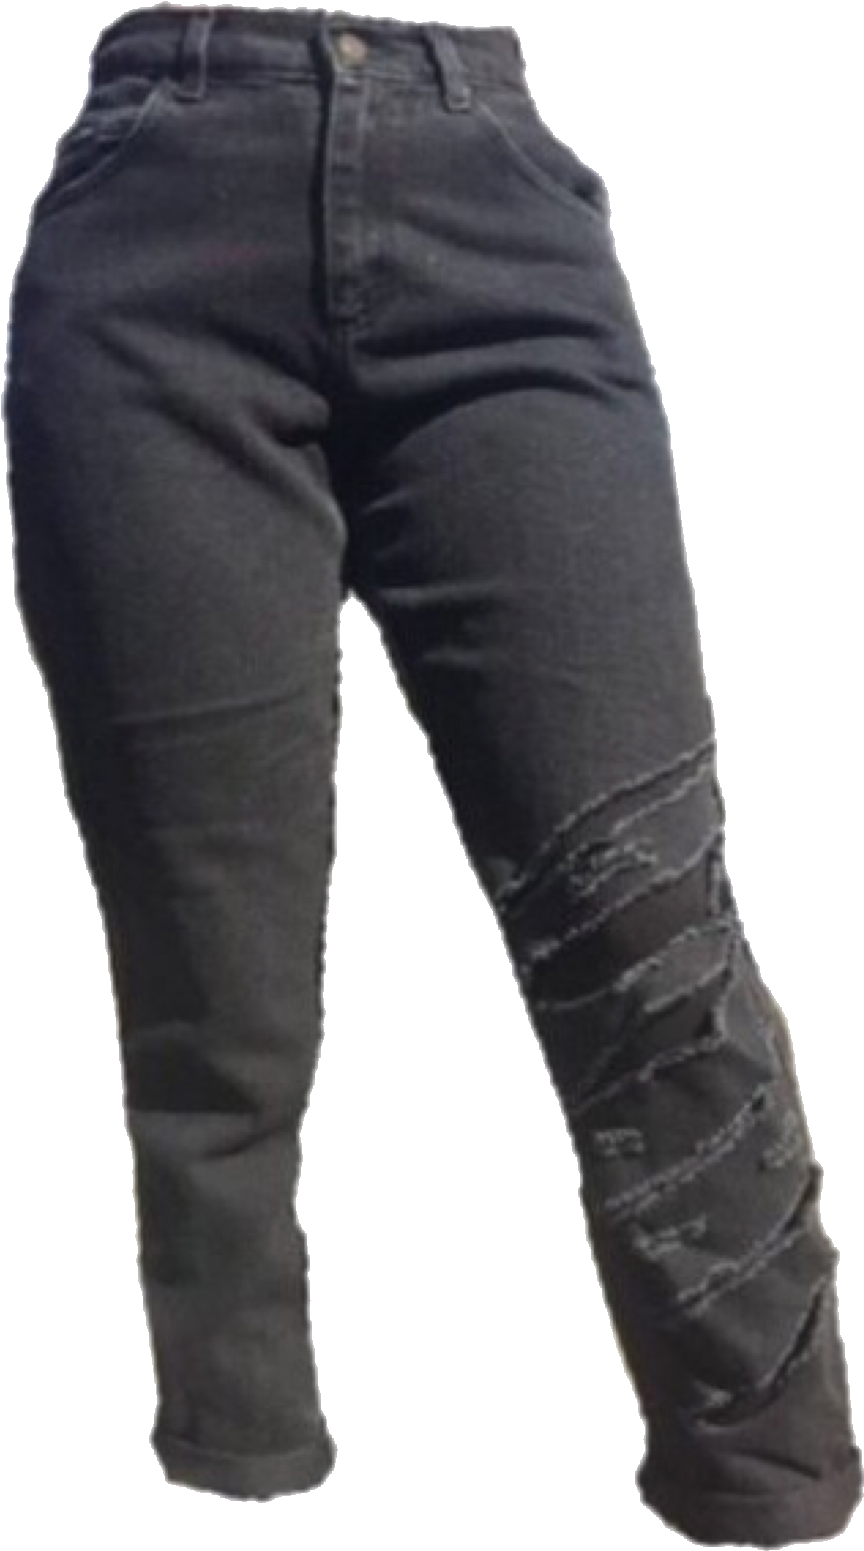 Black Denim Jeans Standing Position PNG